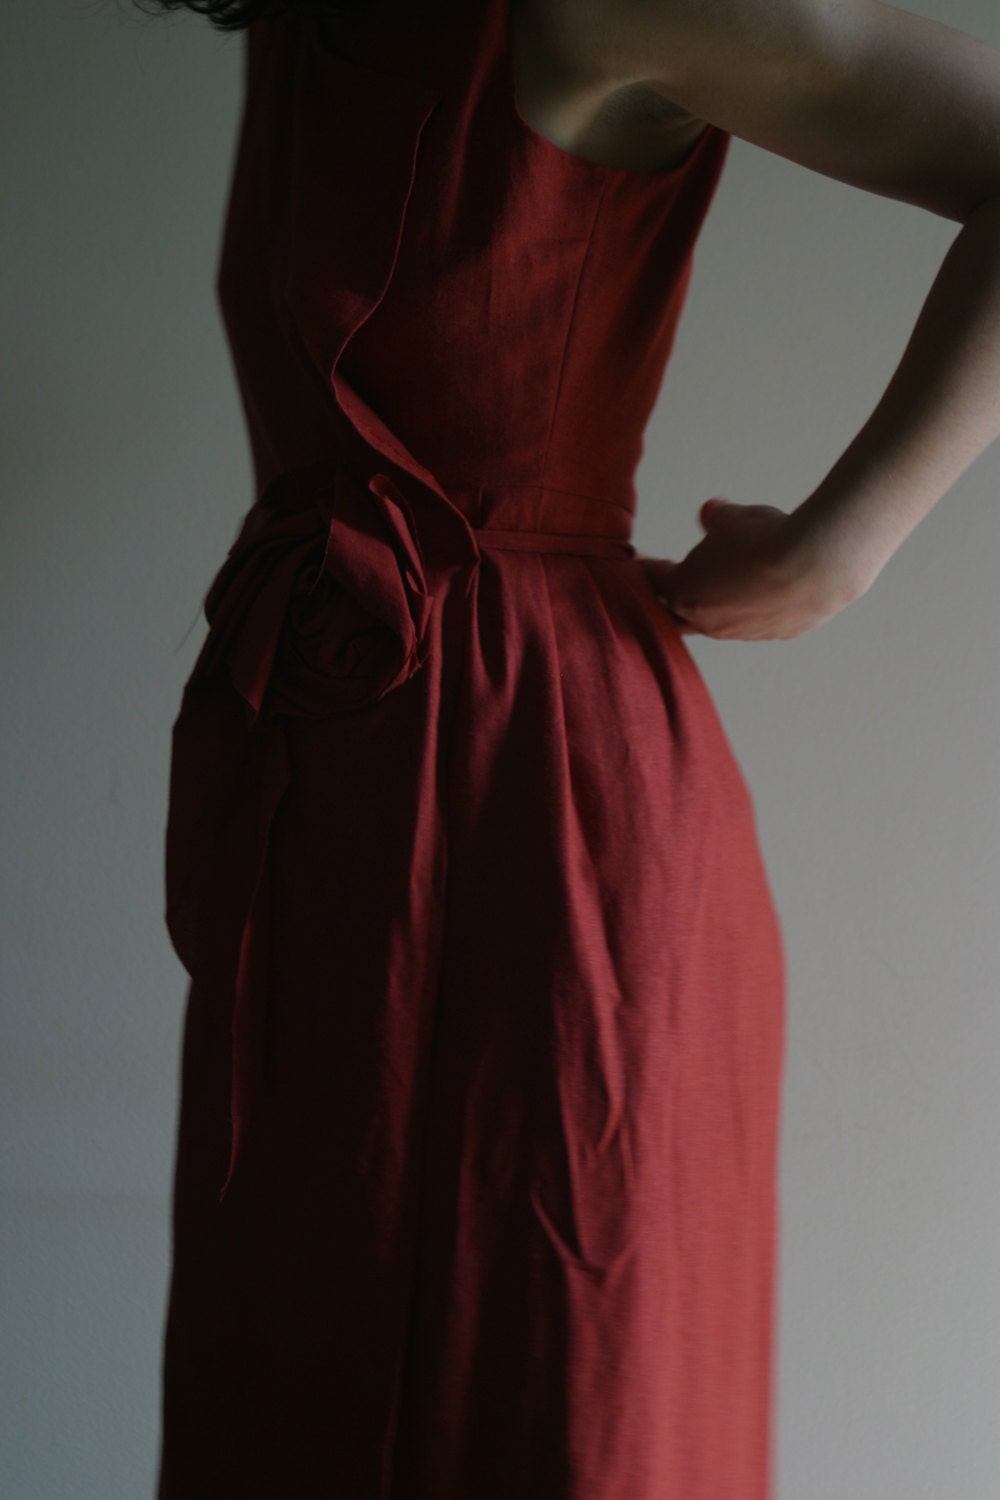 Wrap Linen Terracotta Dress Small/Medium by NervousWardrobe on Etsy